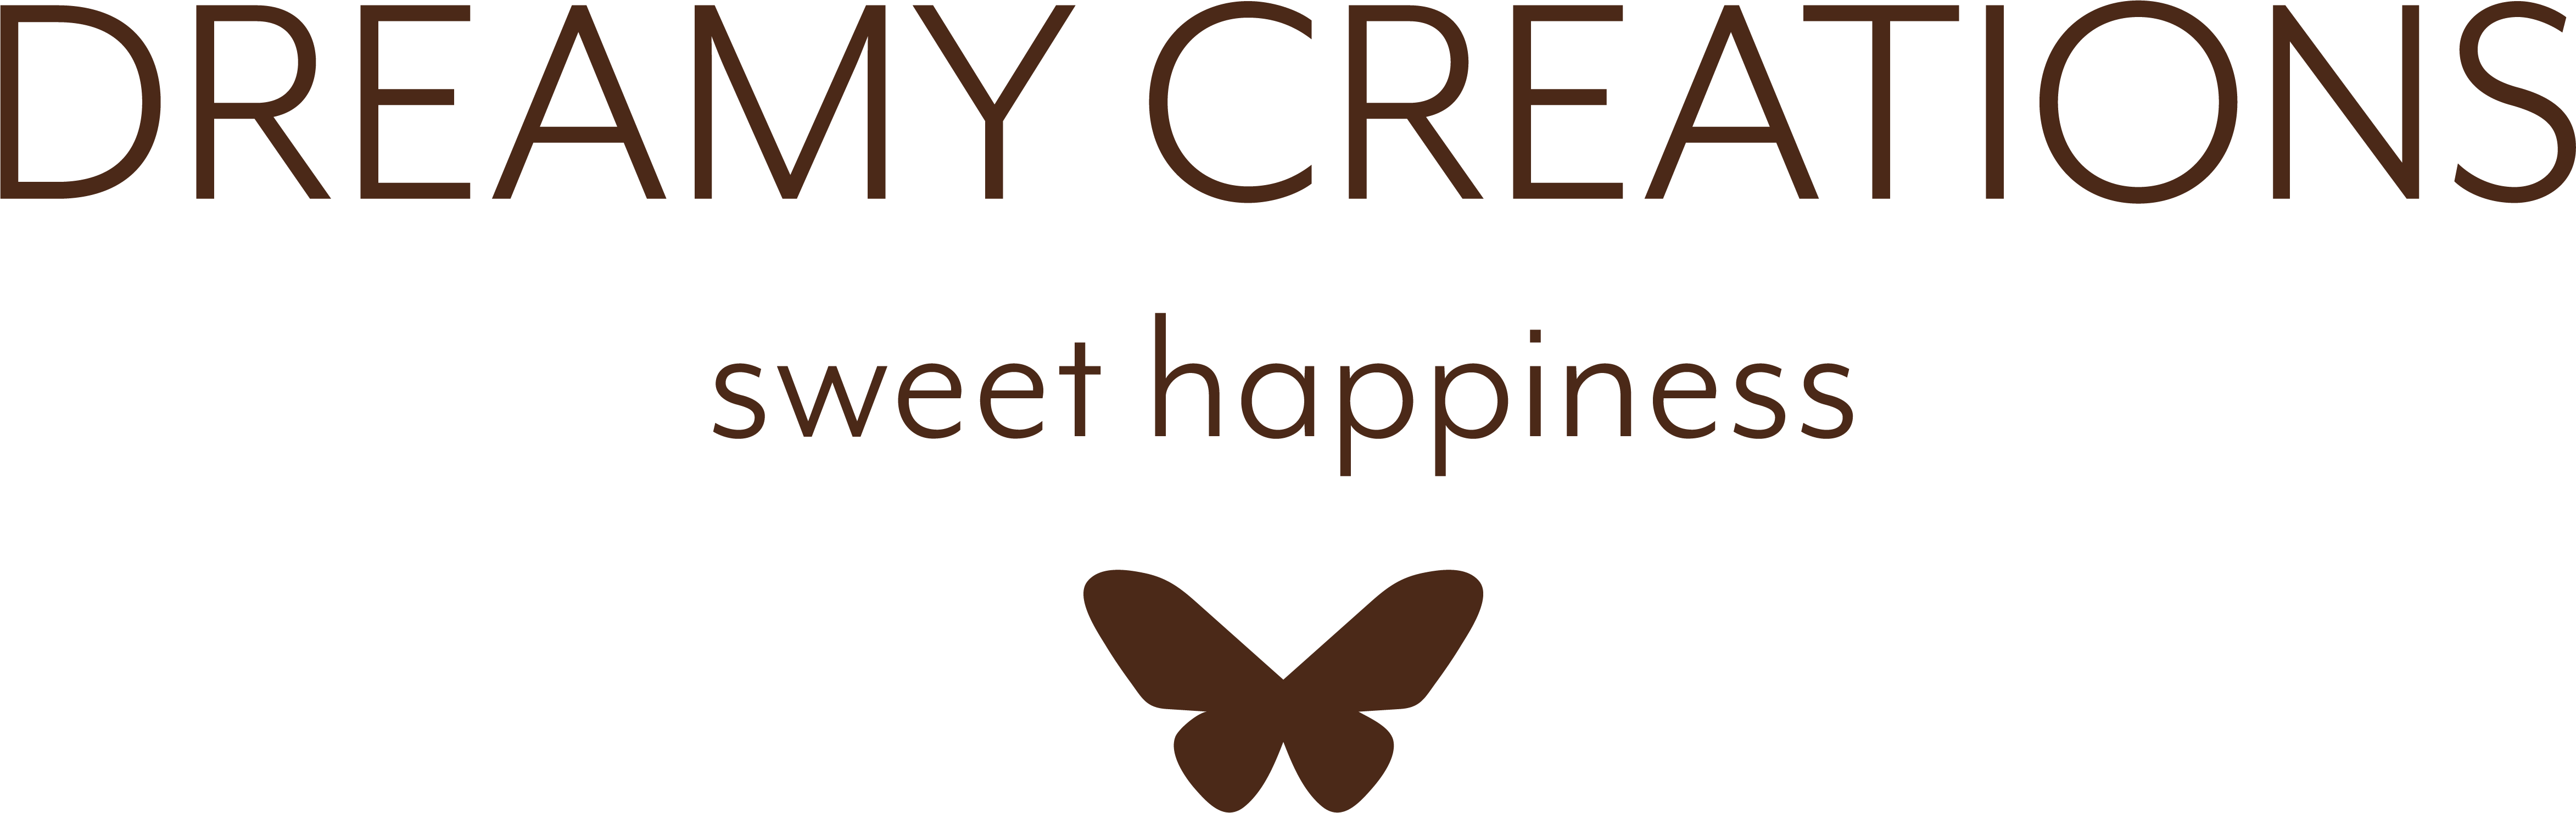 Dreamy Creations logo